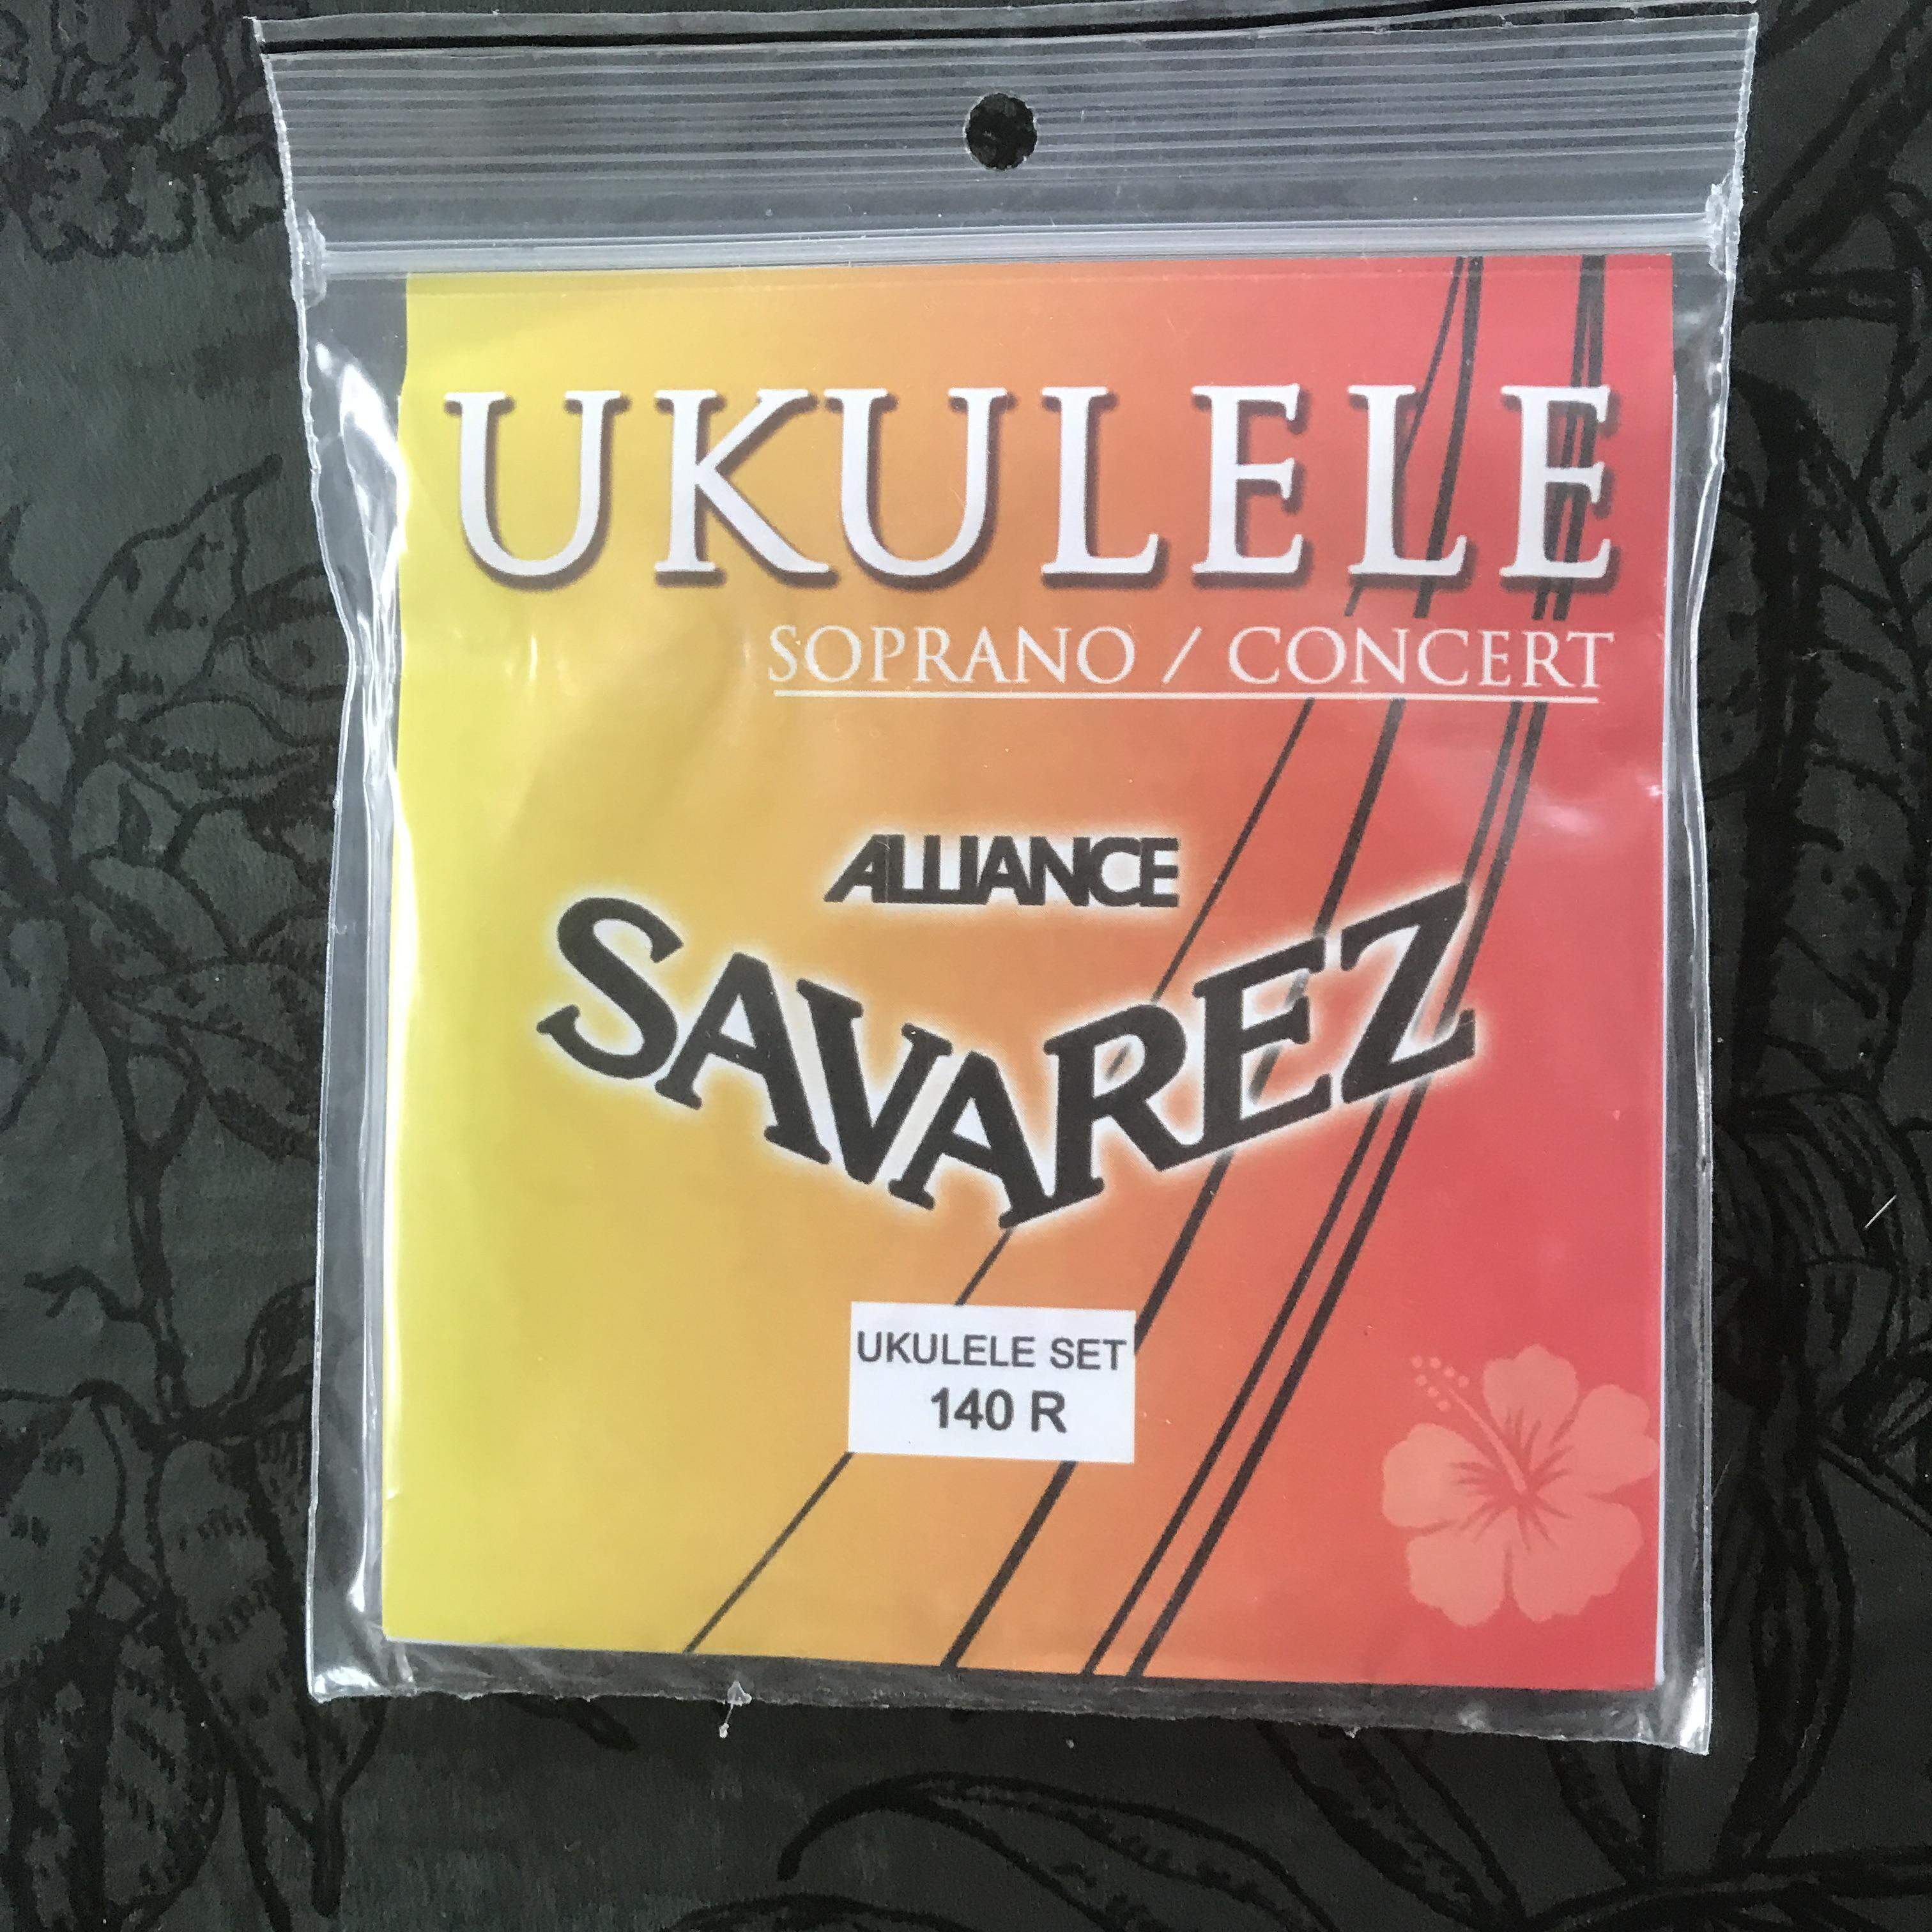 Savarez alliance - sopraan / concert